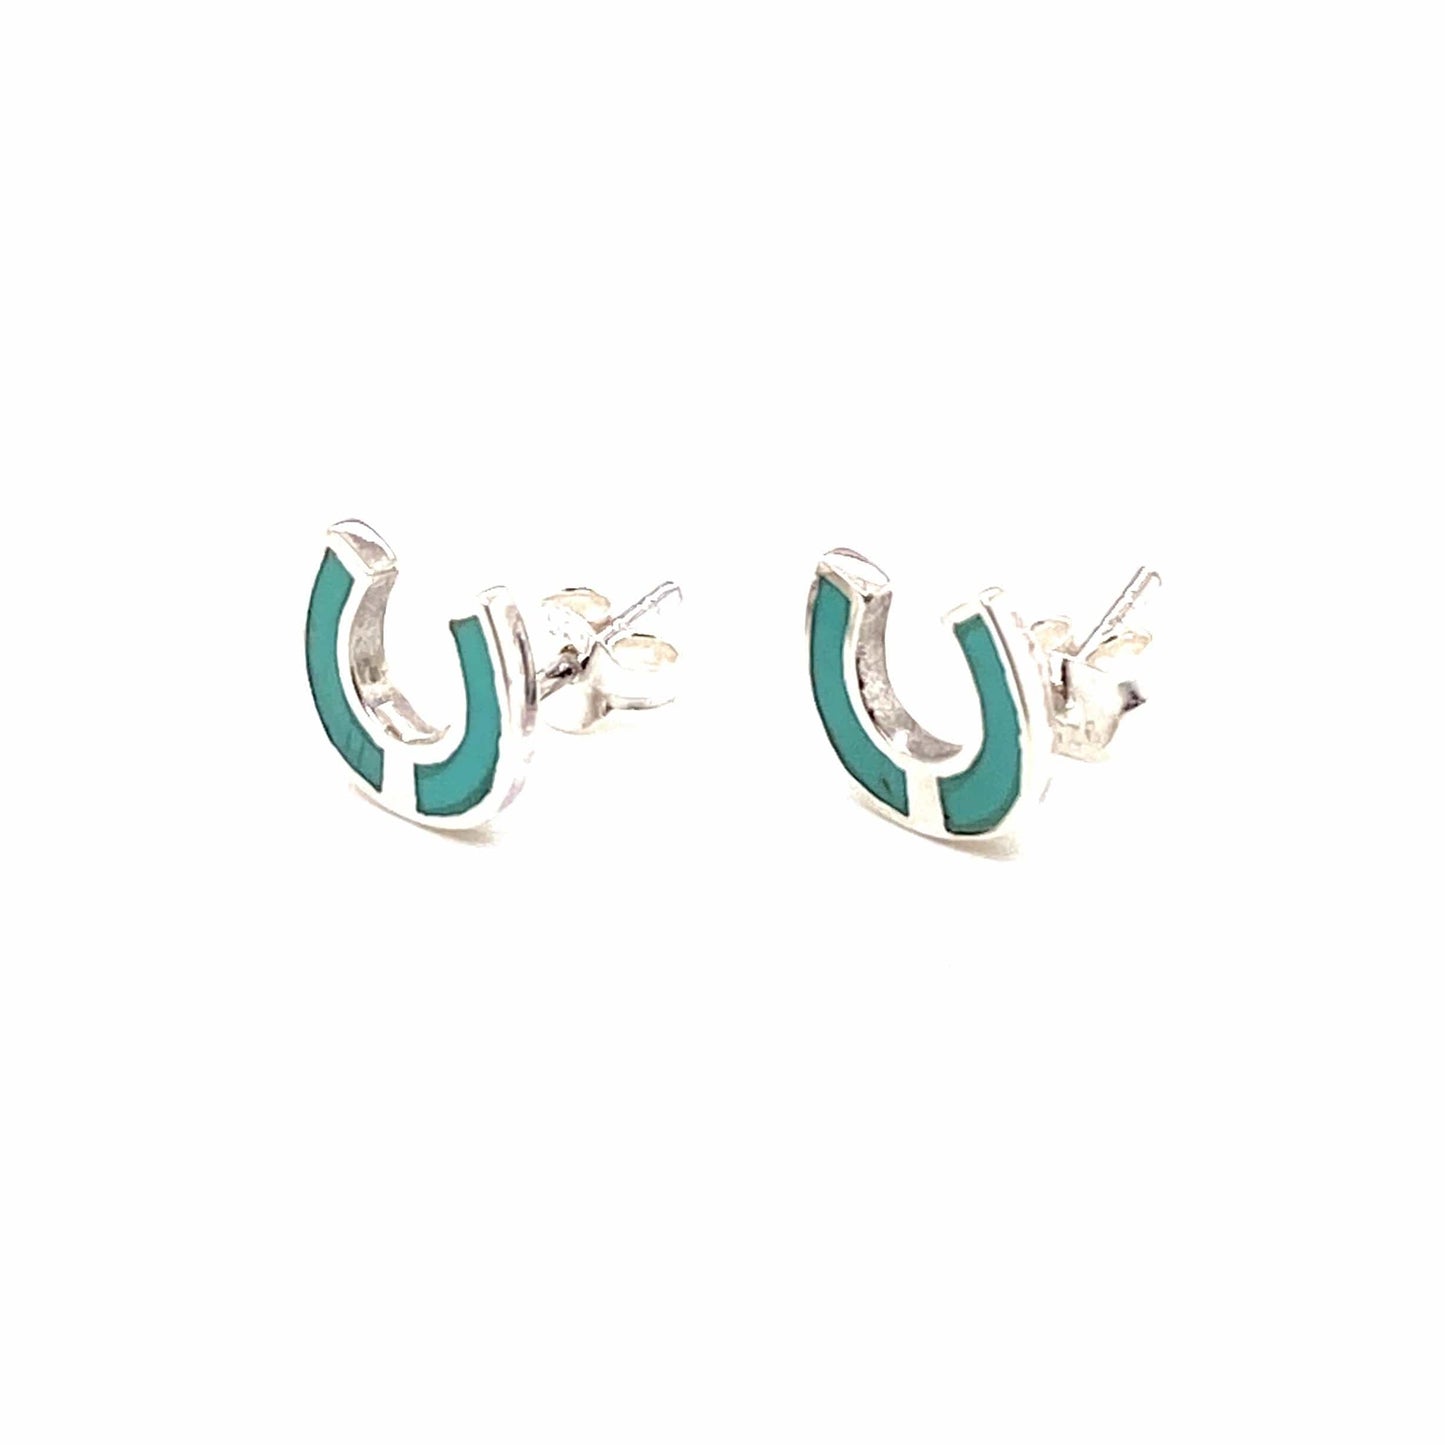 PEGASUS JEWELLERY Earrings Turquoise Horseshoe Earrings